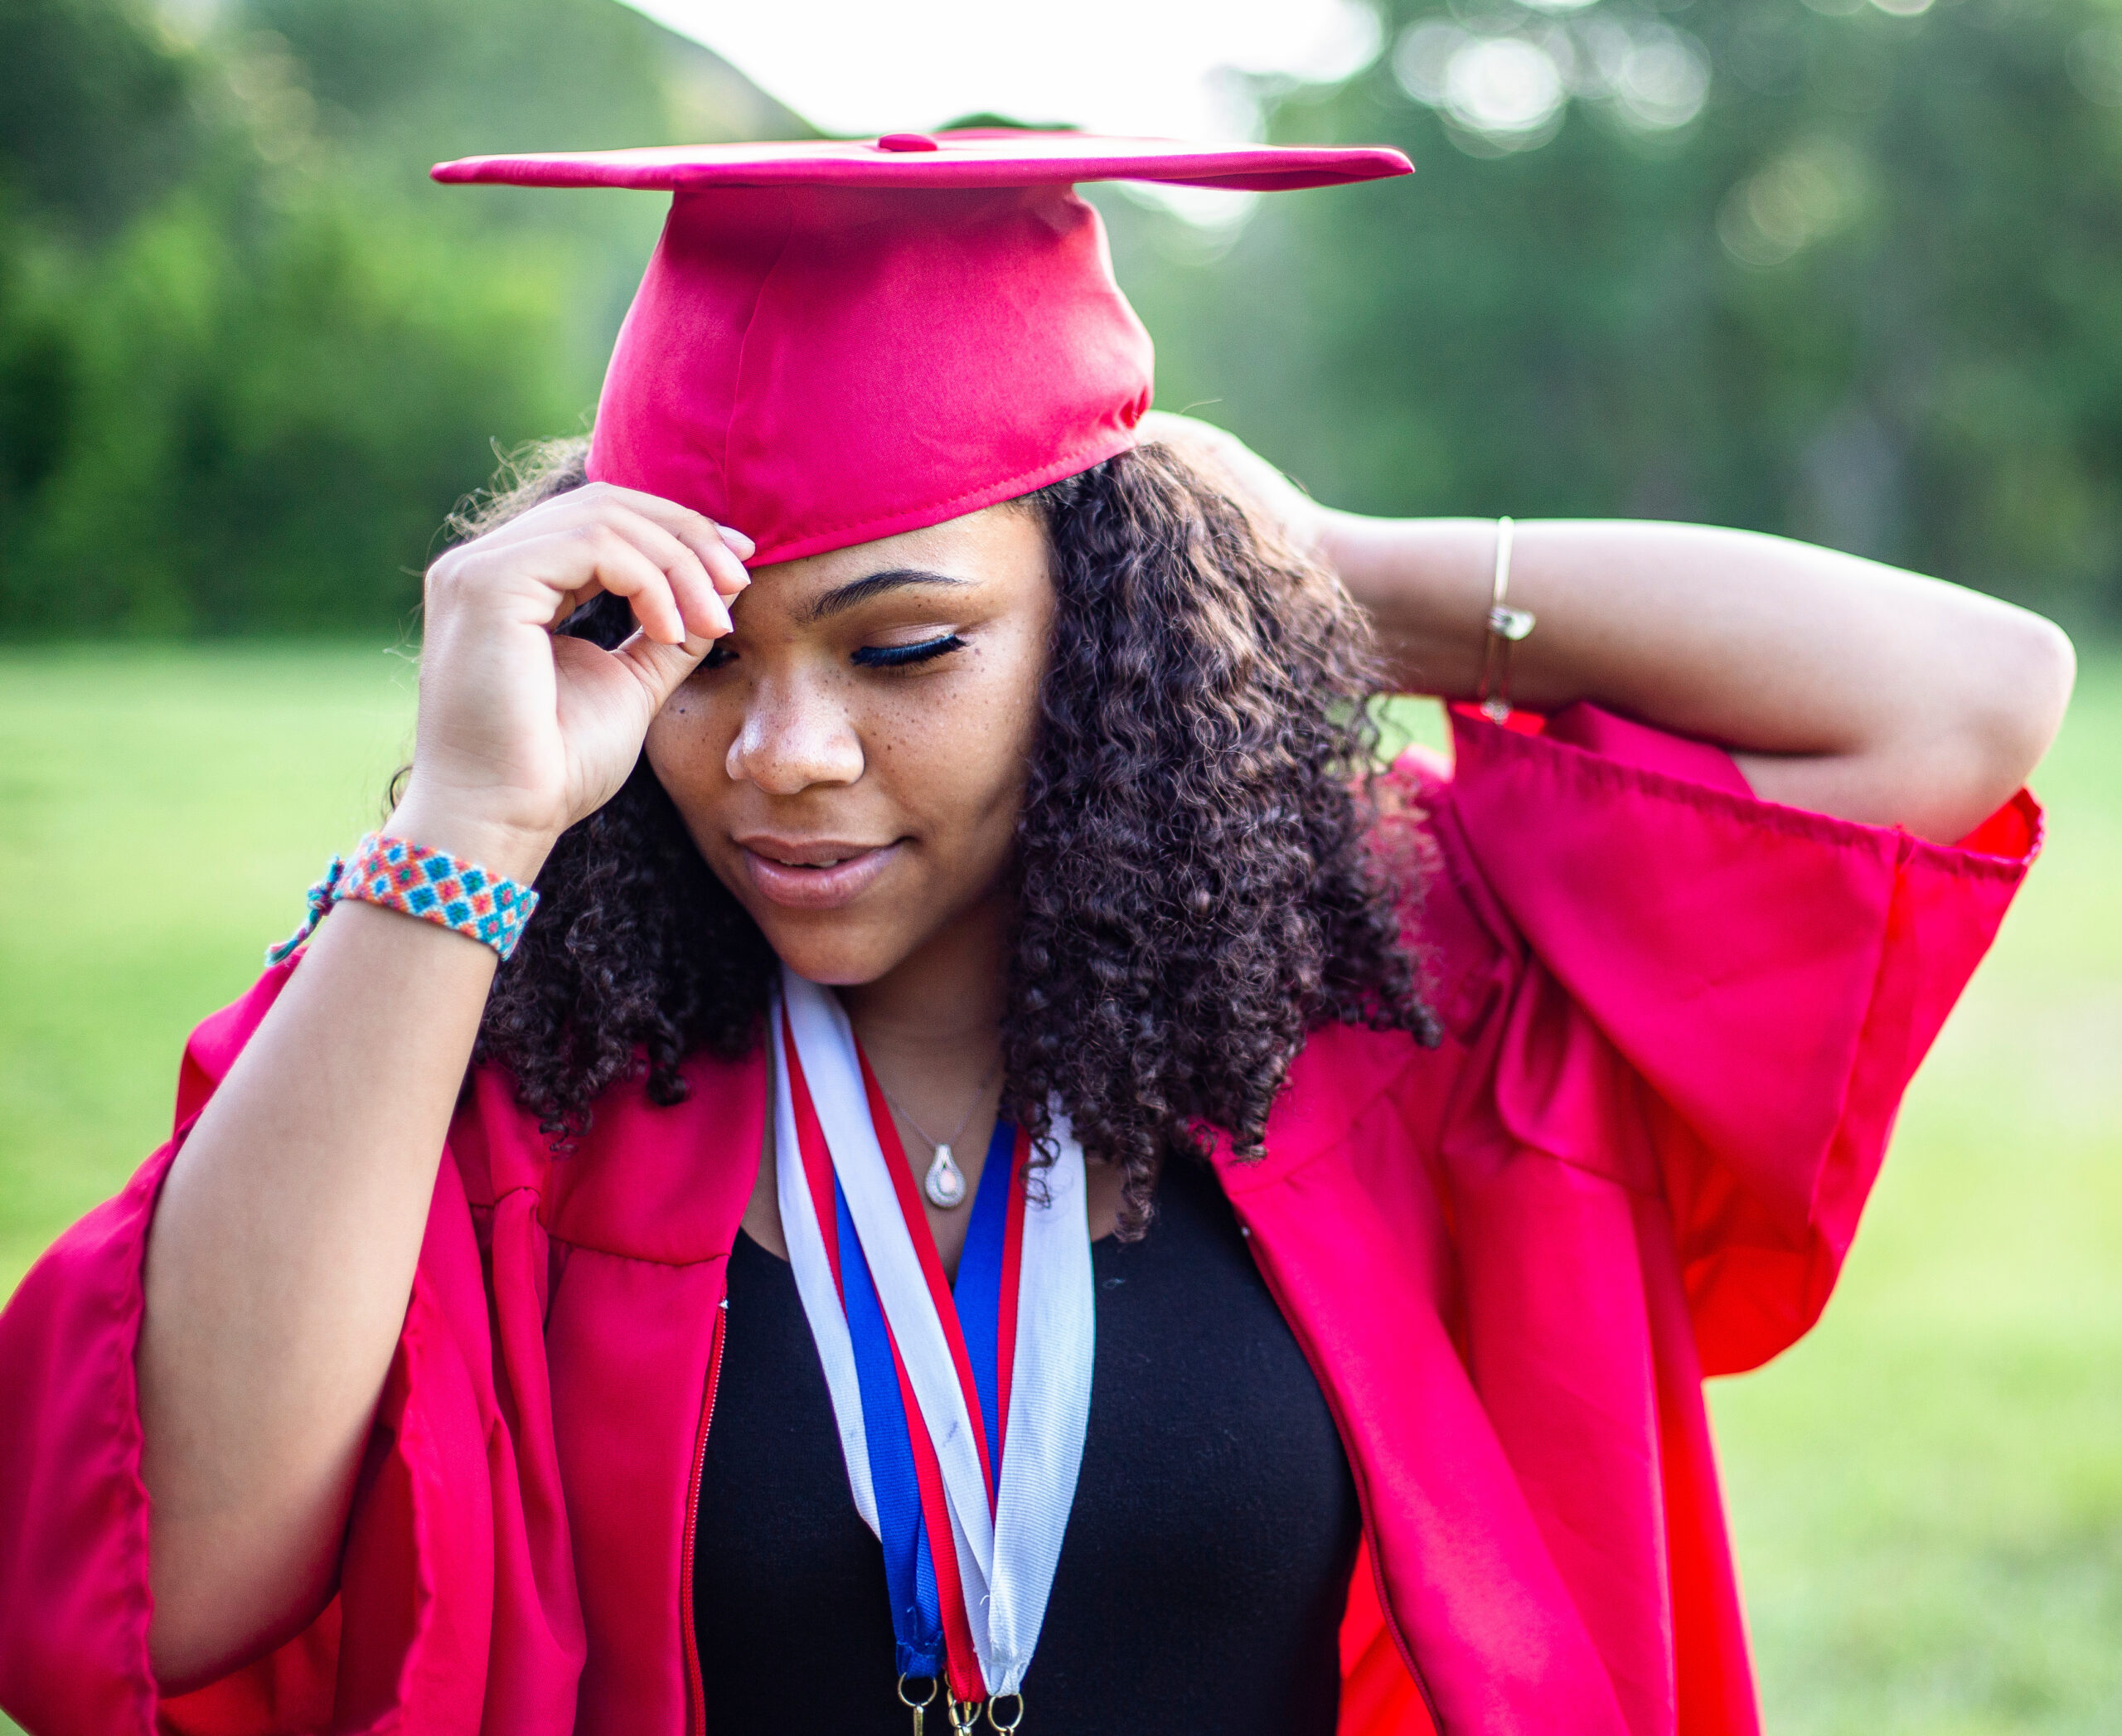 A high school senior putting on her graduation cap.